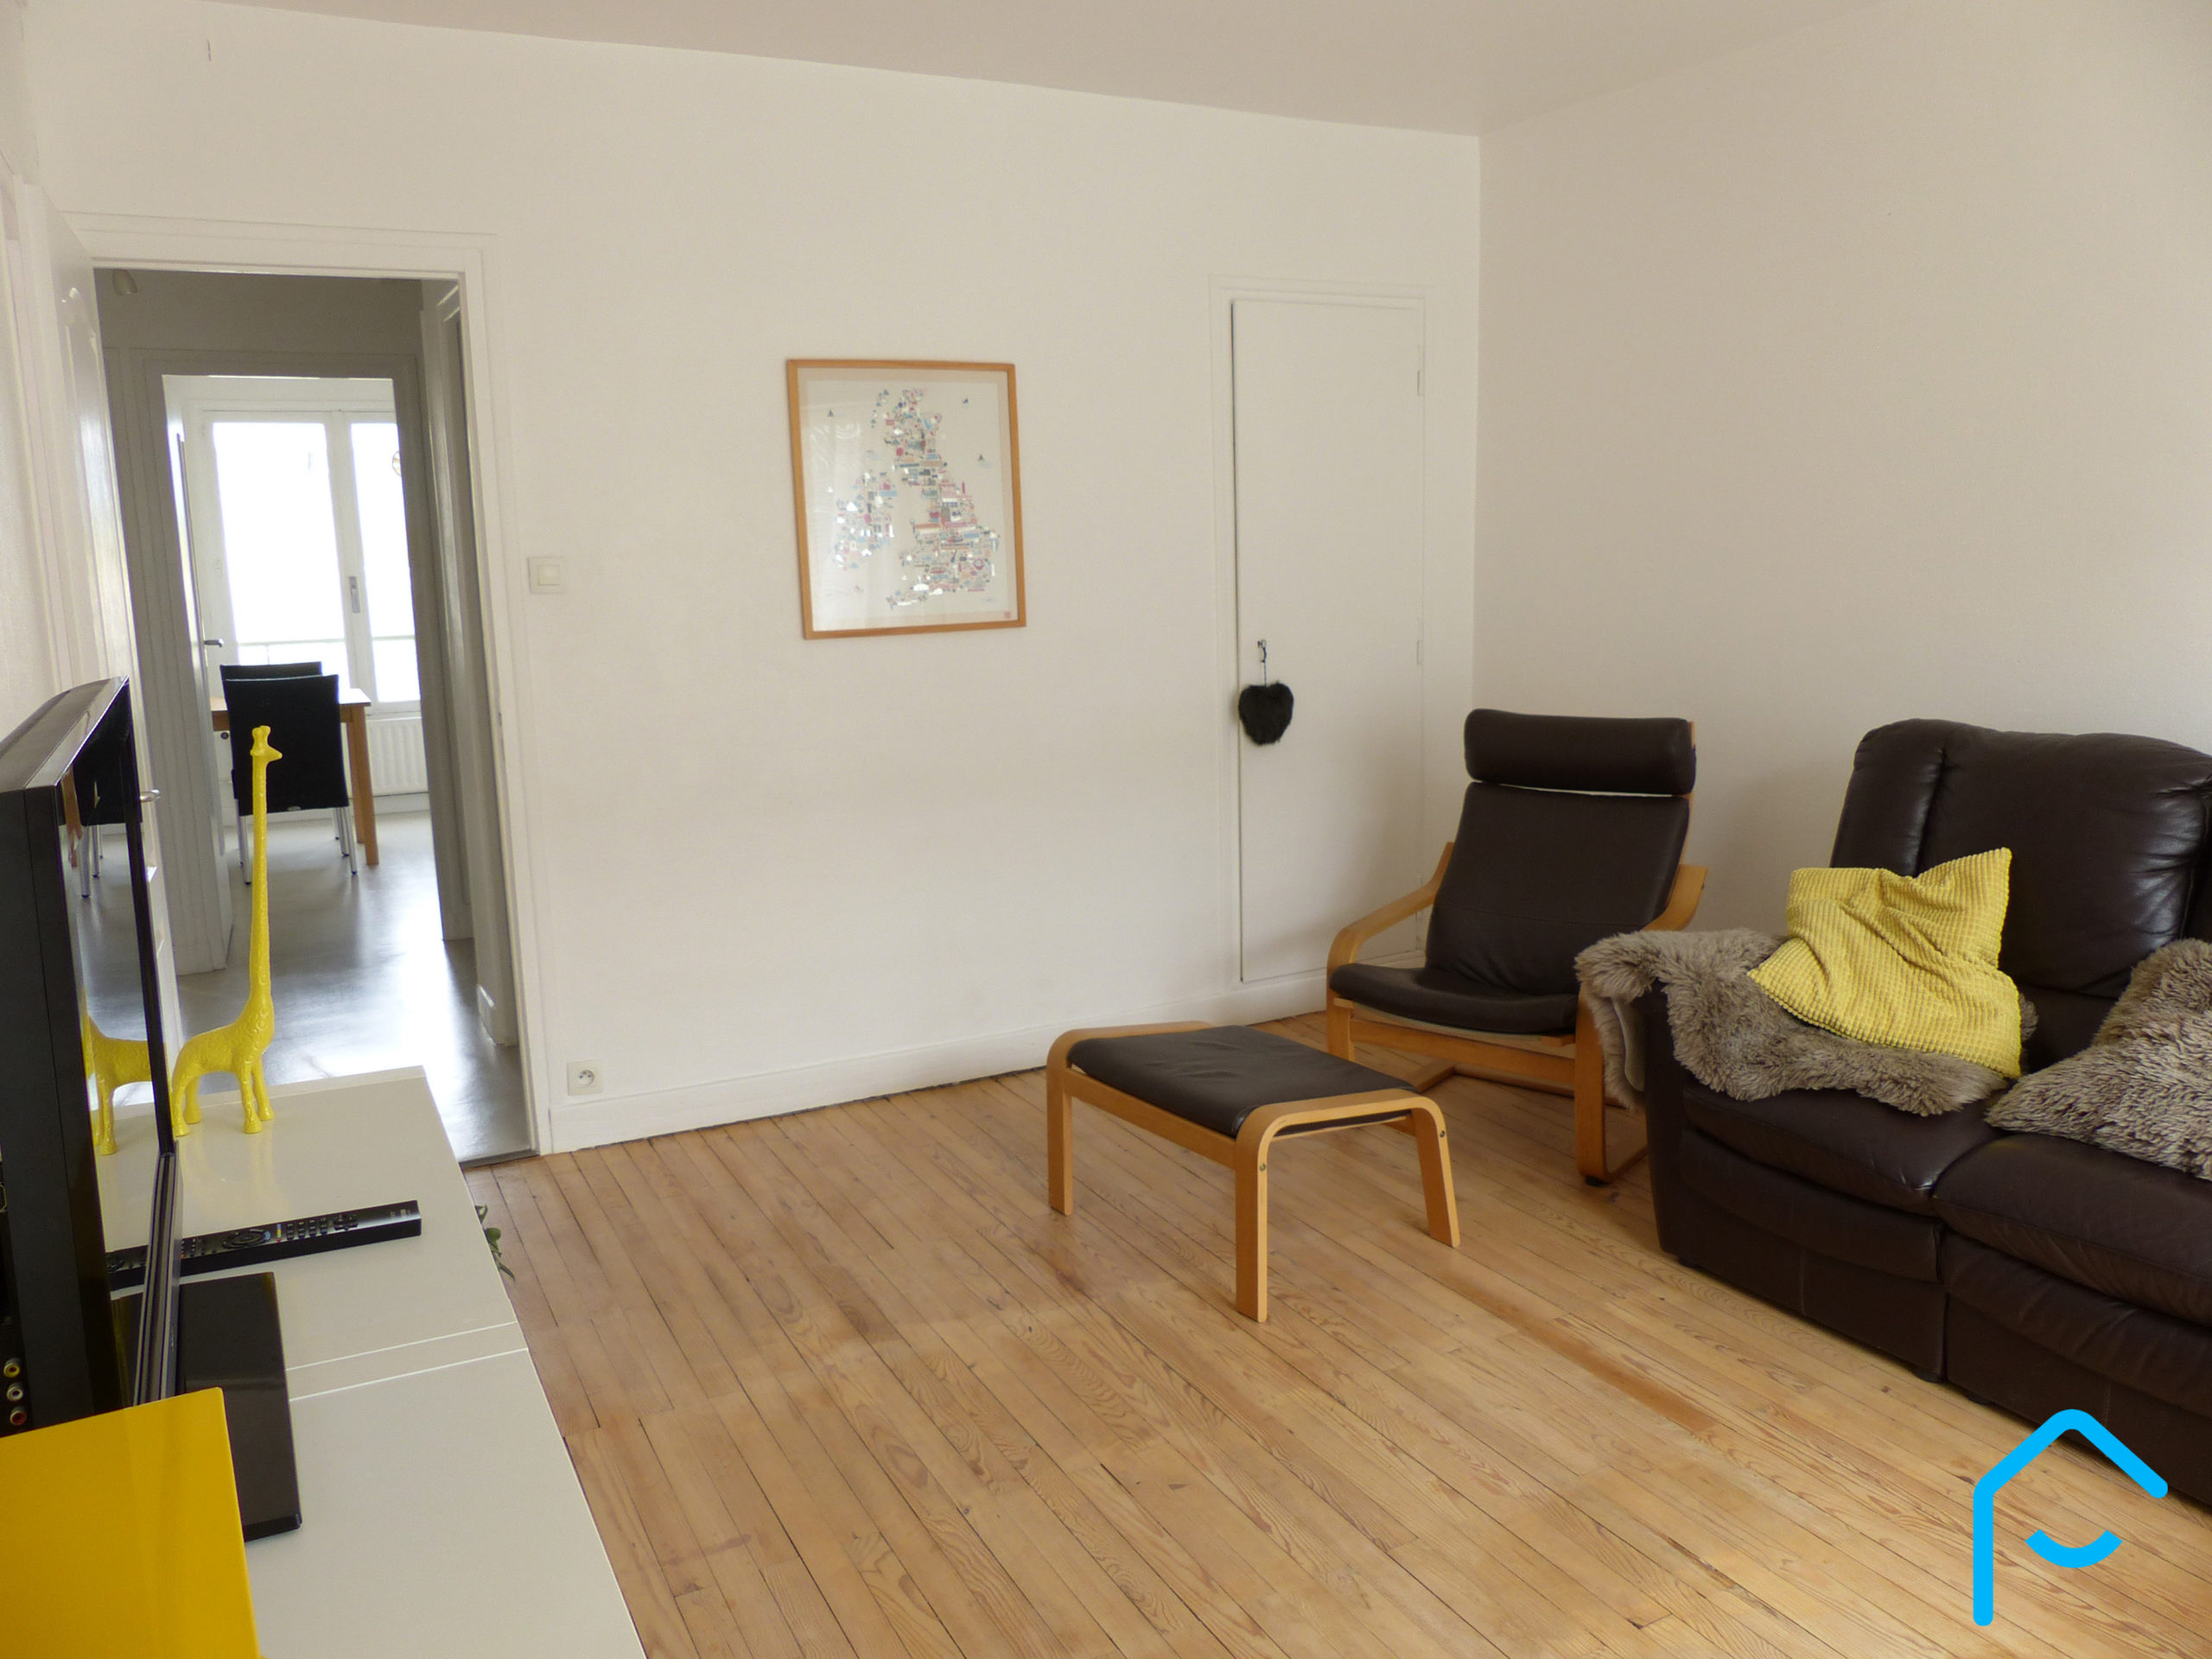 vente appartement T3 Chambéry Savoie lumineux 2 chambres investisseur